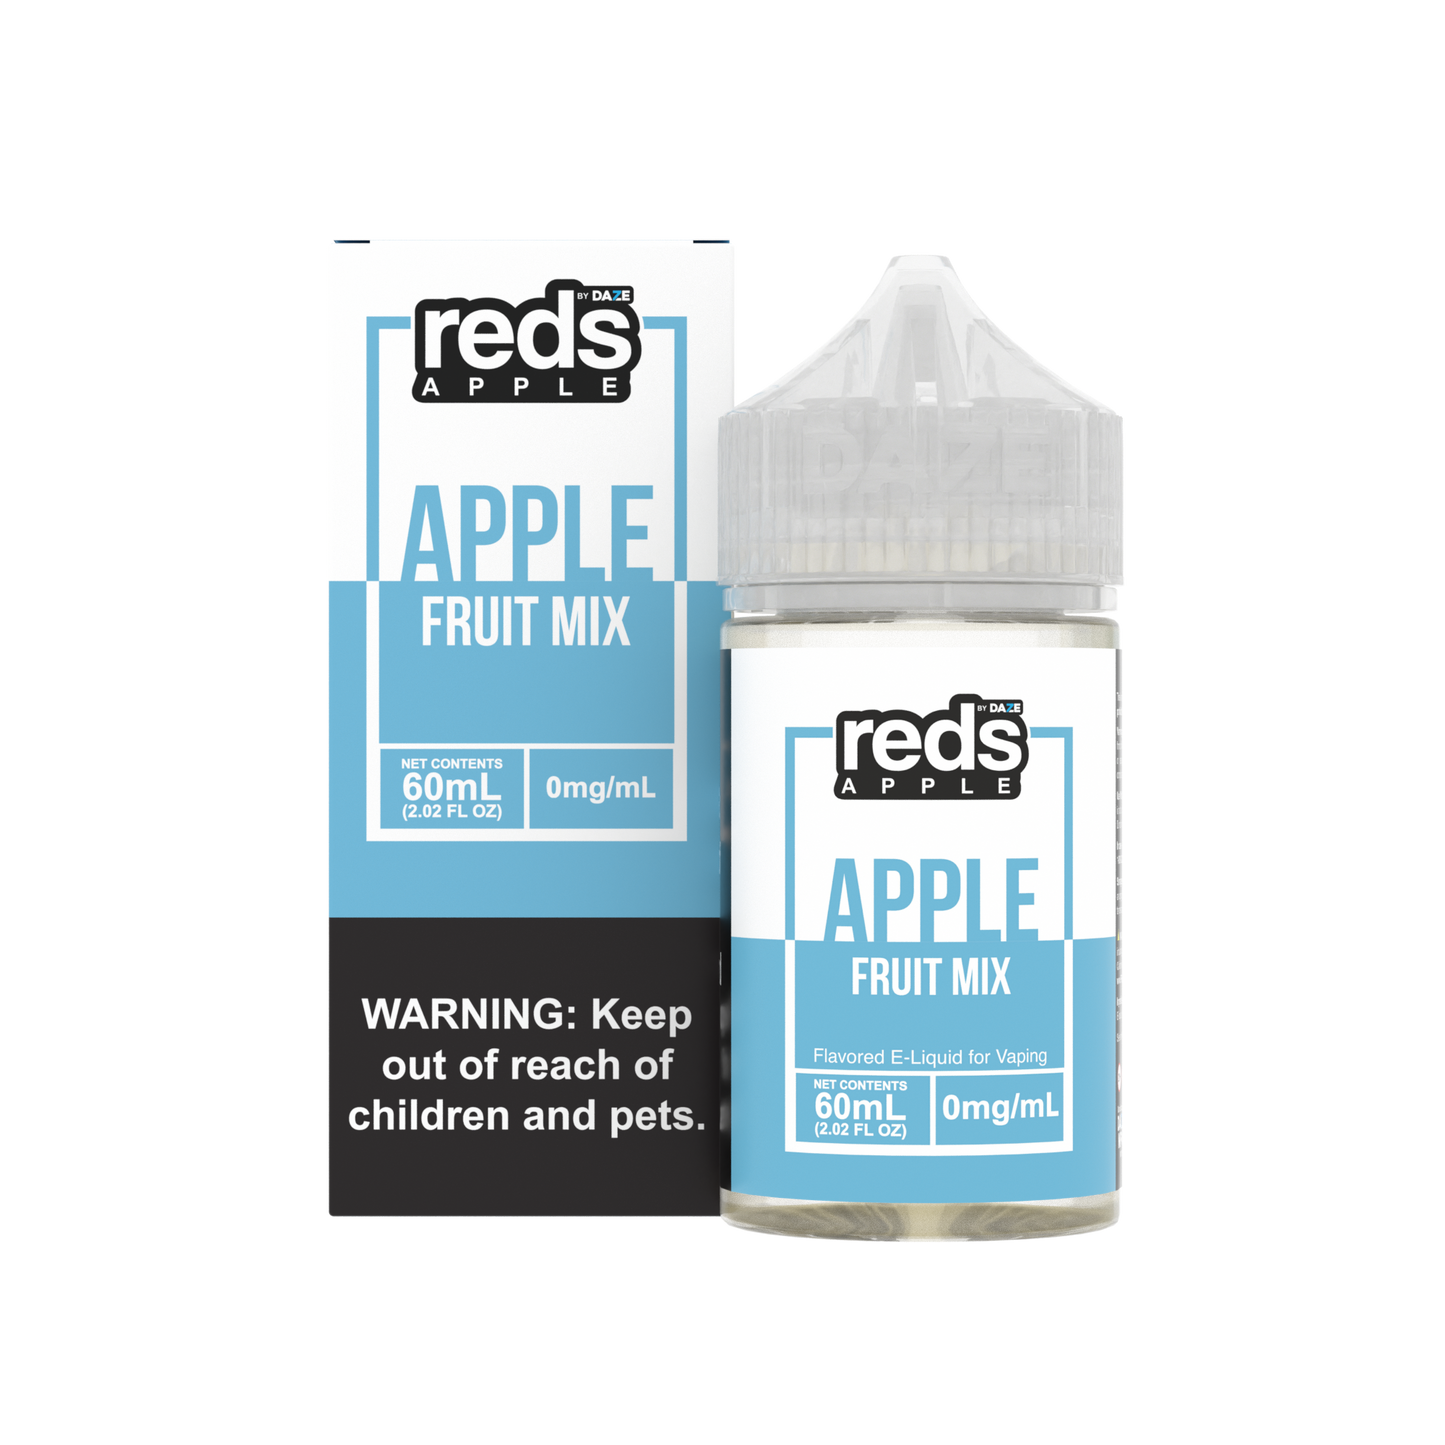 Reds: Apple Fruit Mix